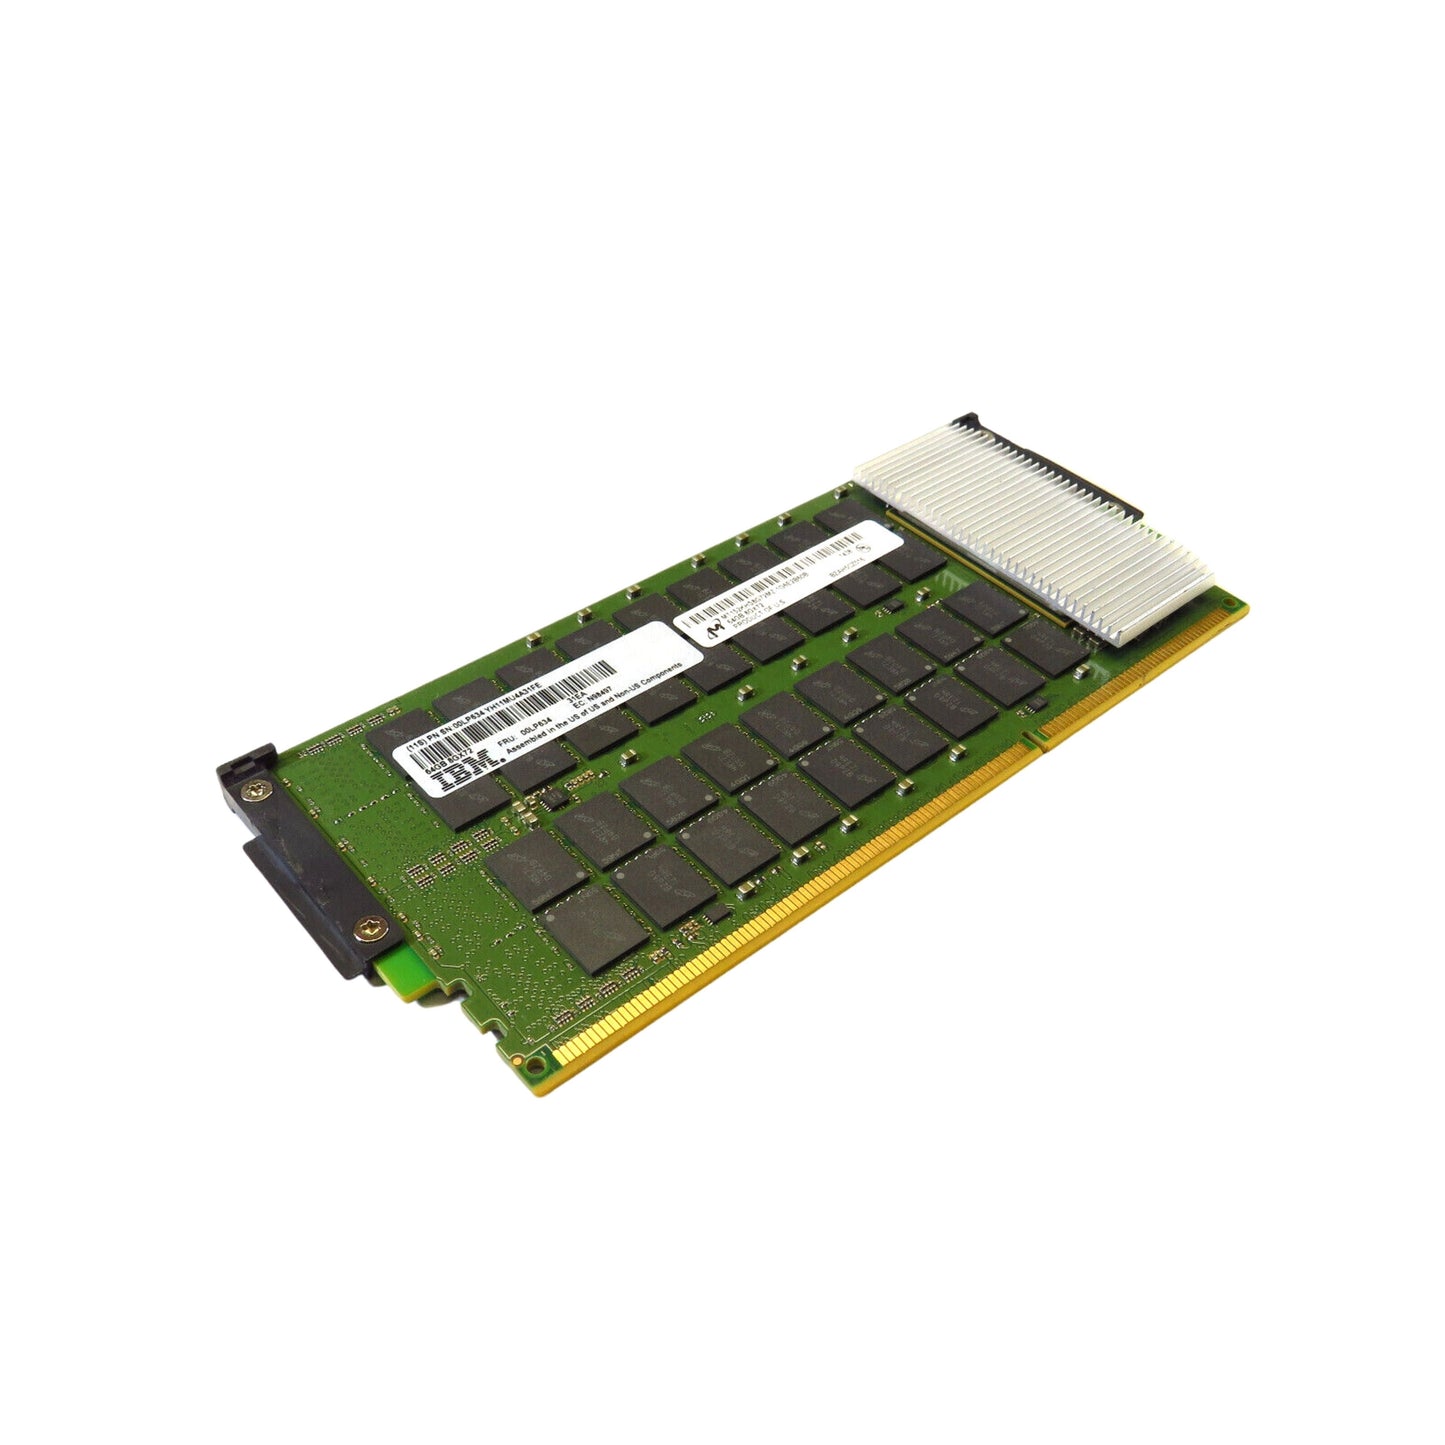 IBM 00LP634 64GB 8GX72 DDR3 CDIMM Server Memory (Refurbished)